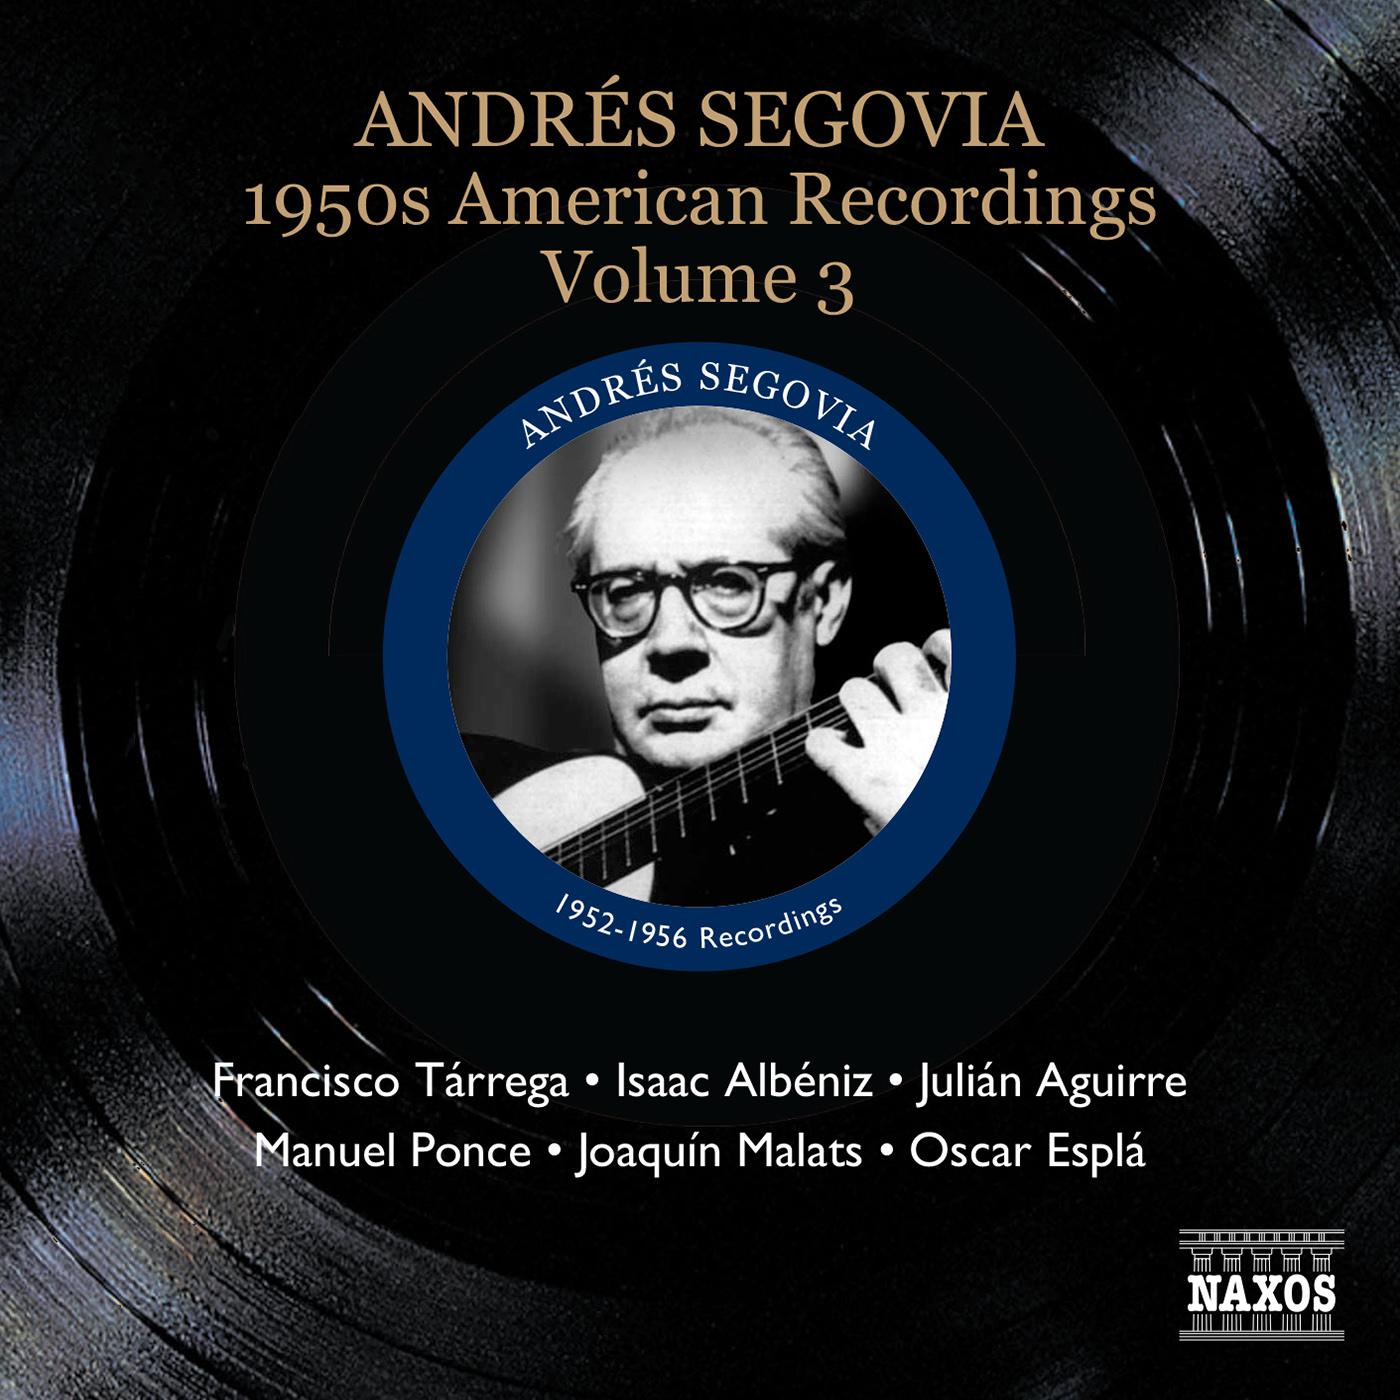 SEGOVIA, Andres: 1950s American Recordings, Vol. 3 (Segovia, Vol. 5)